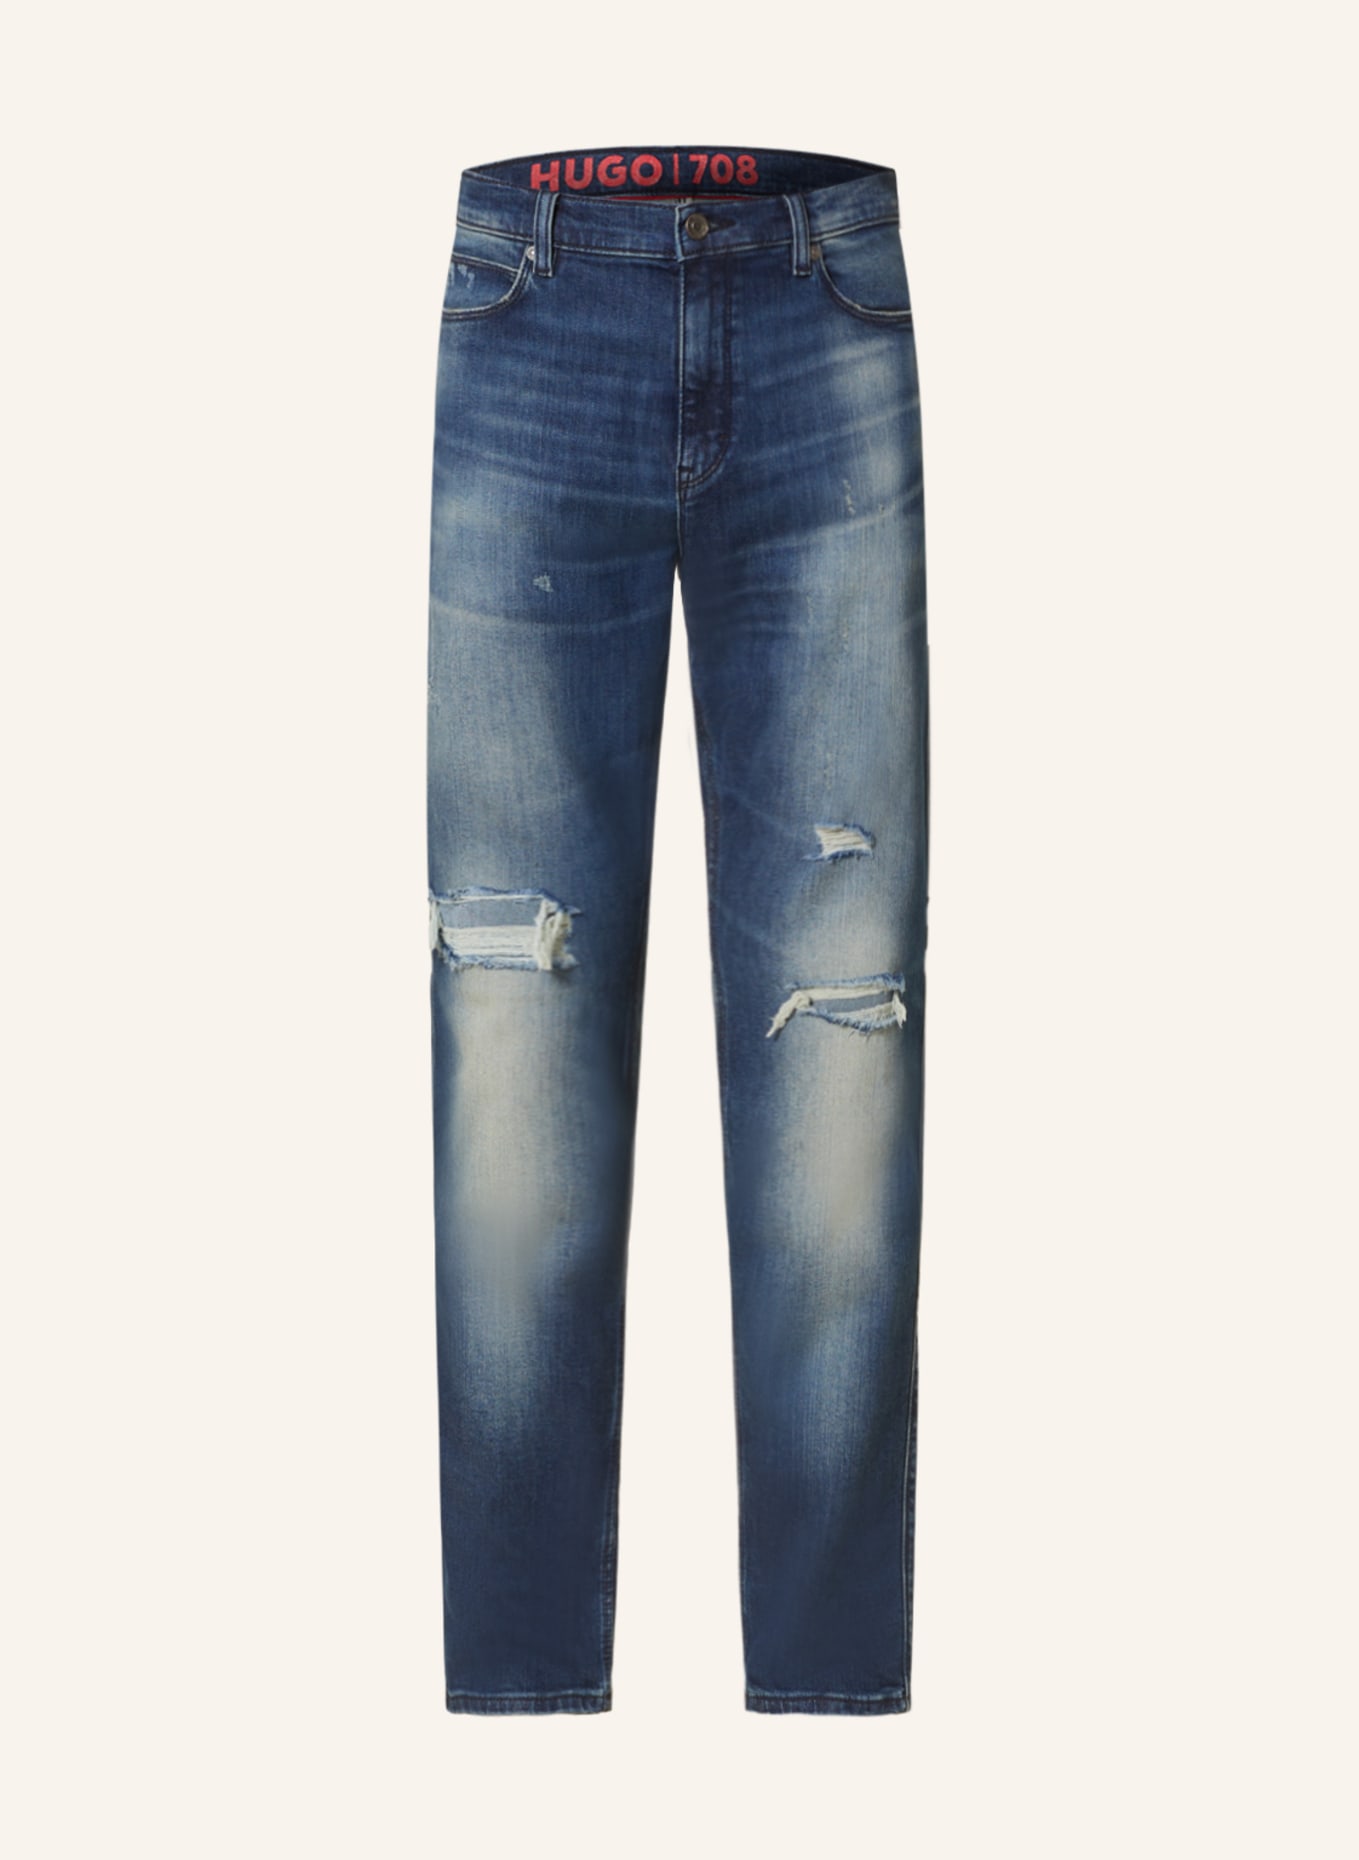 HUGO Destroyed Jeans 708 Slim Fit, Farbe: 411 NAVY (Bild 1)